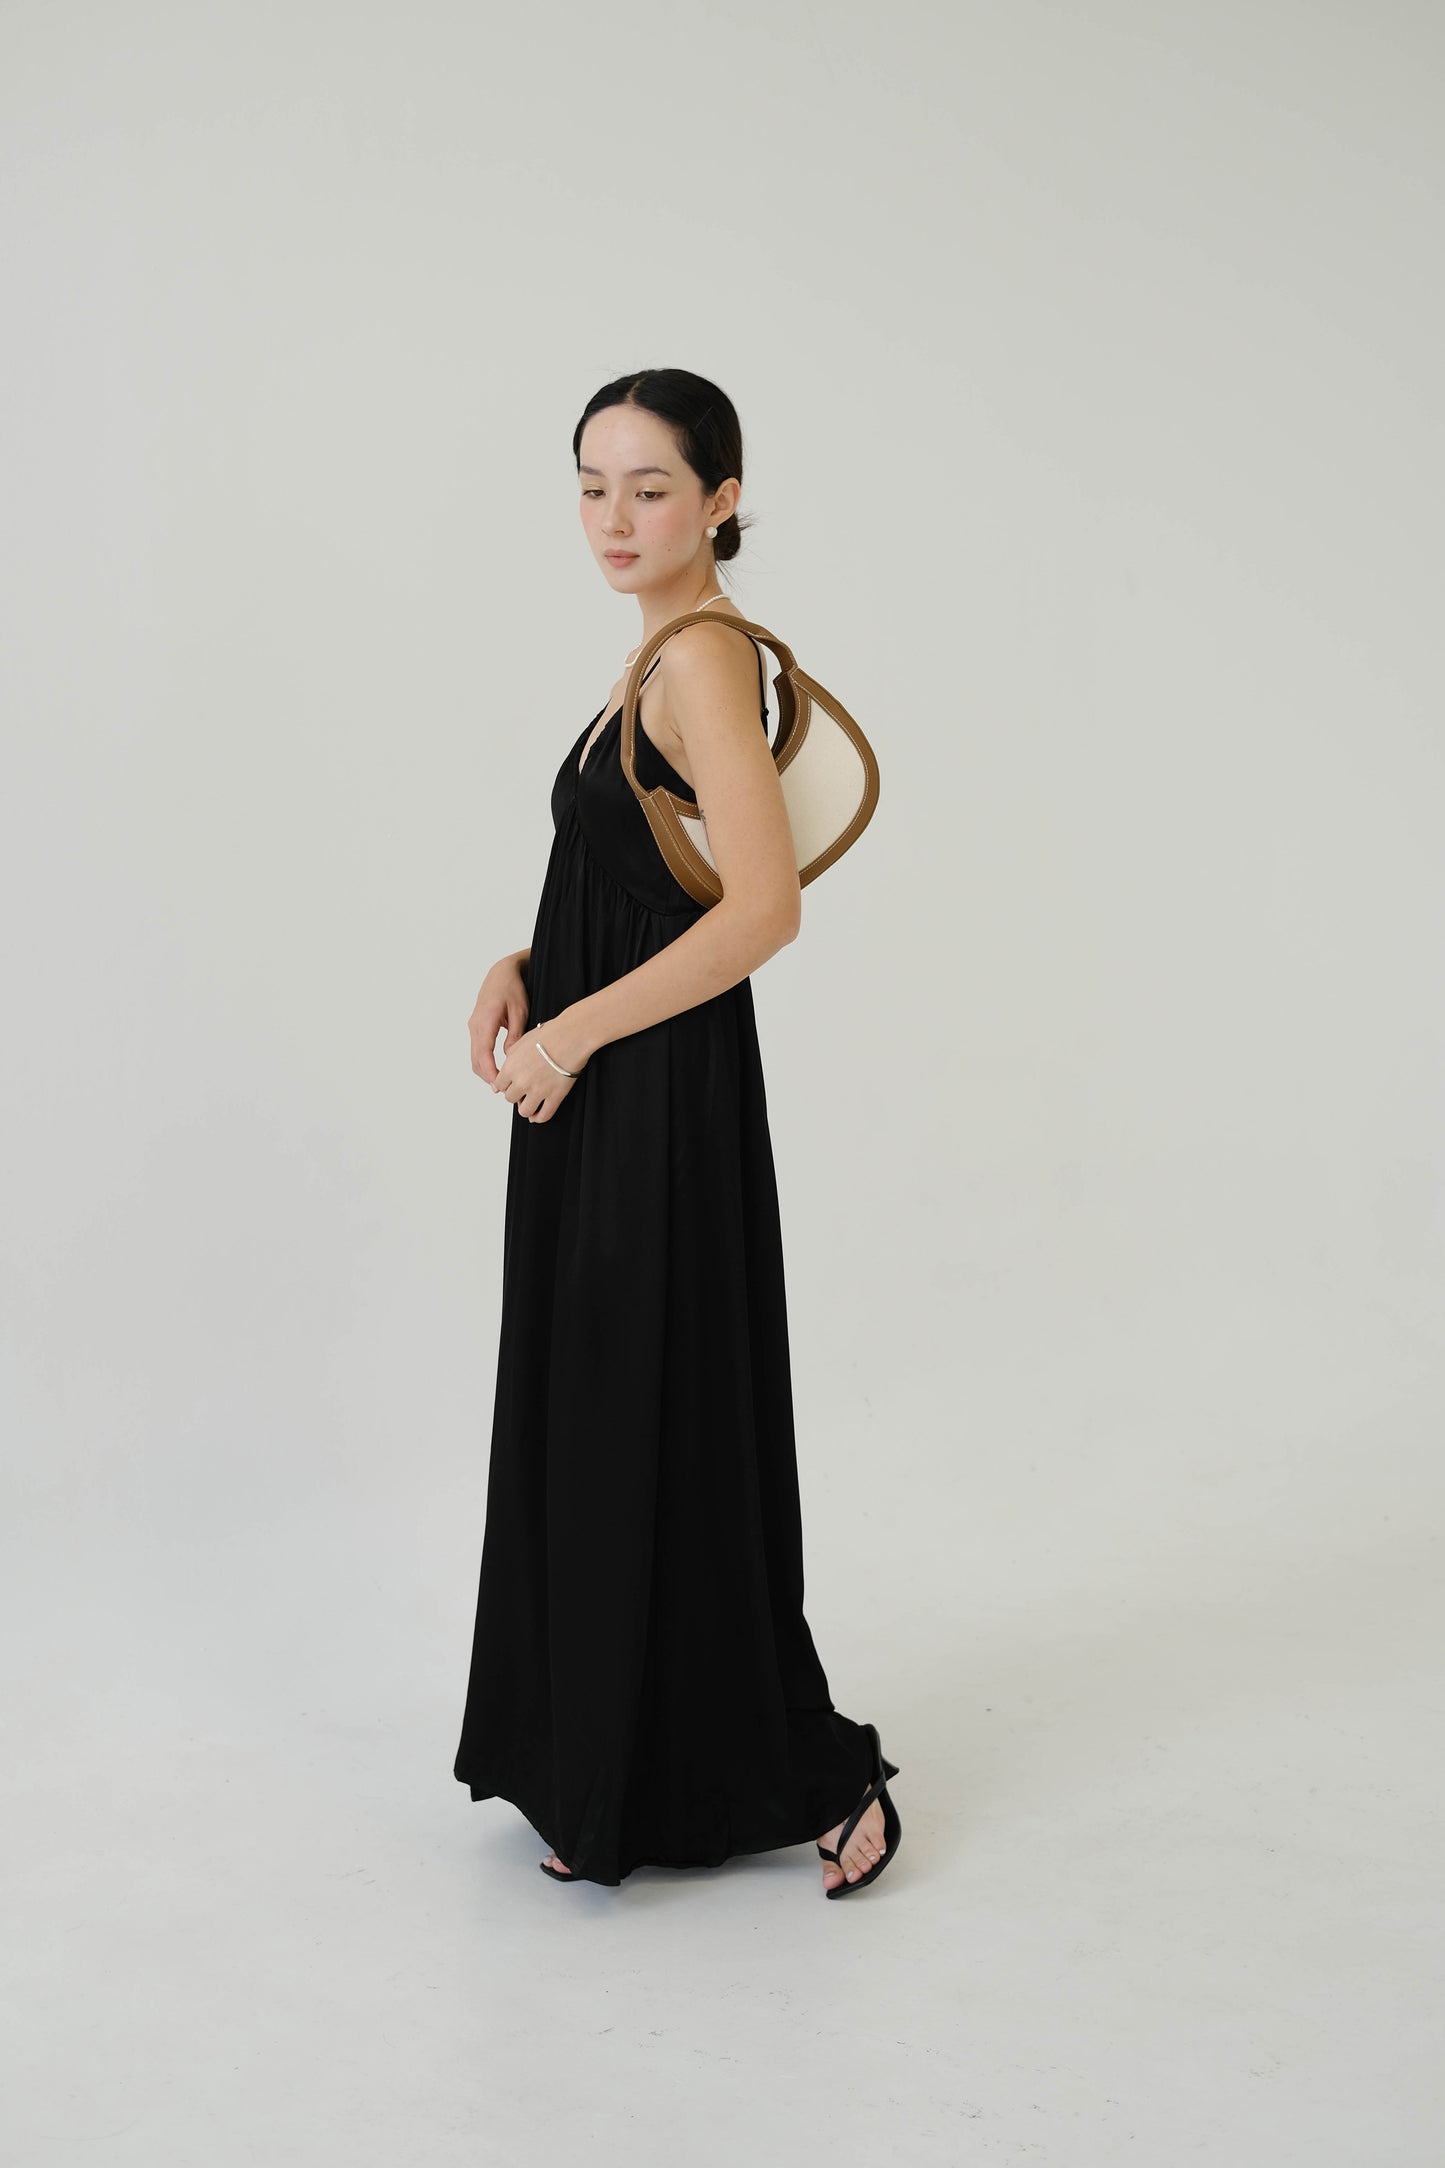 V-neck Sleeves tank top dress in classic black